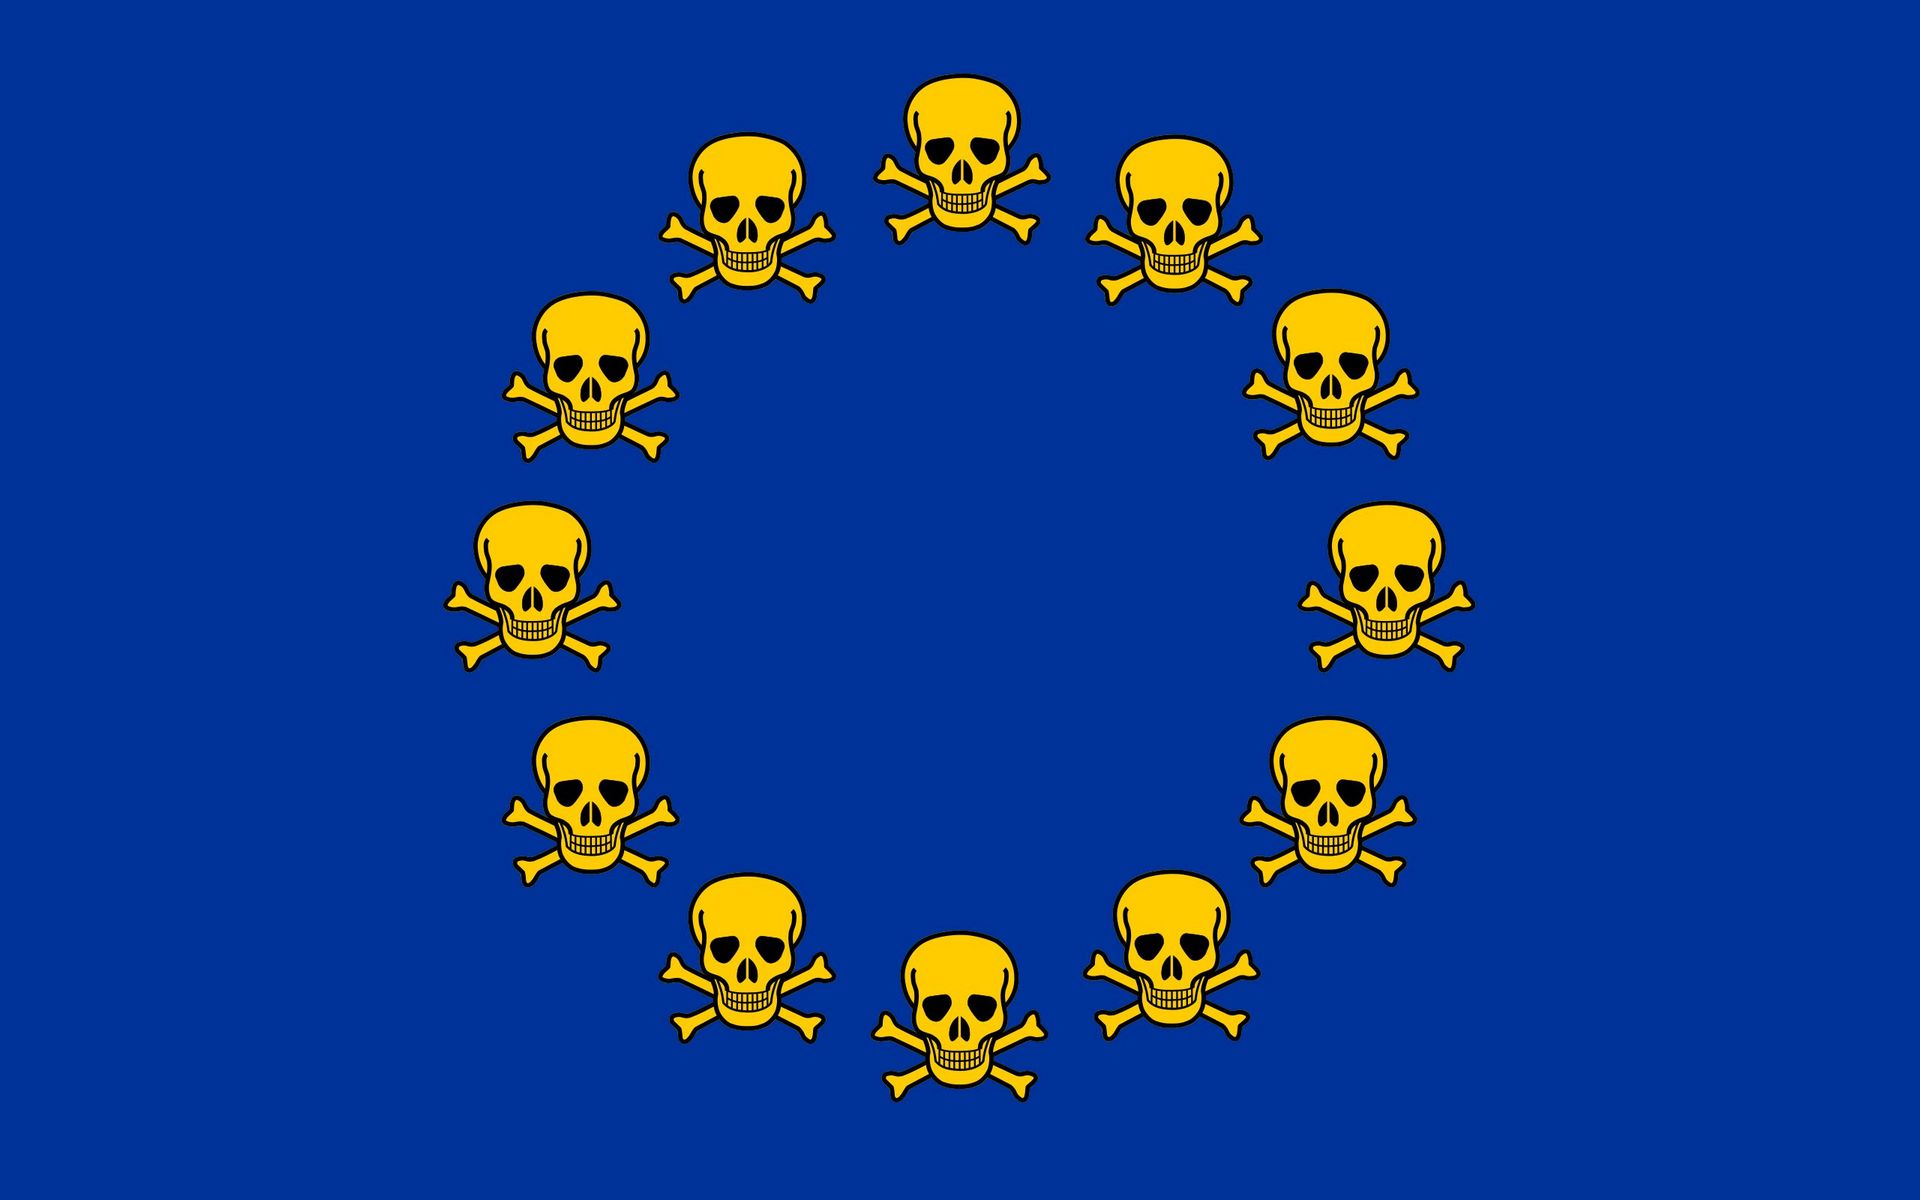 Tapeta, obrázek Evropská unie - 1920x1200 px. Wallpaper na plochu PC zdarma